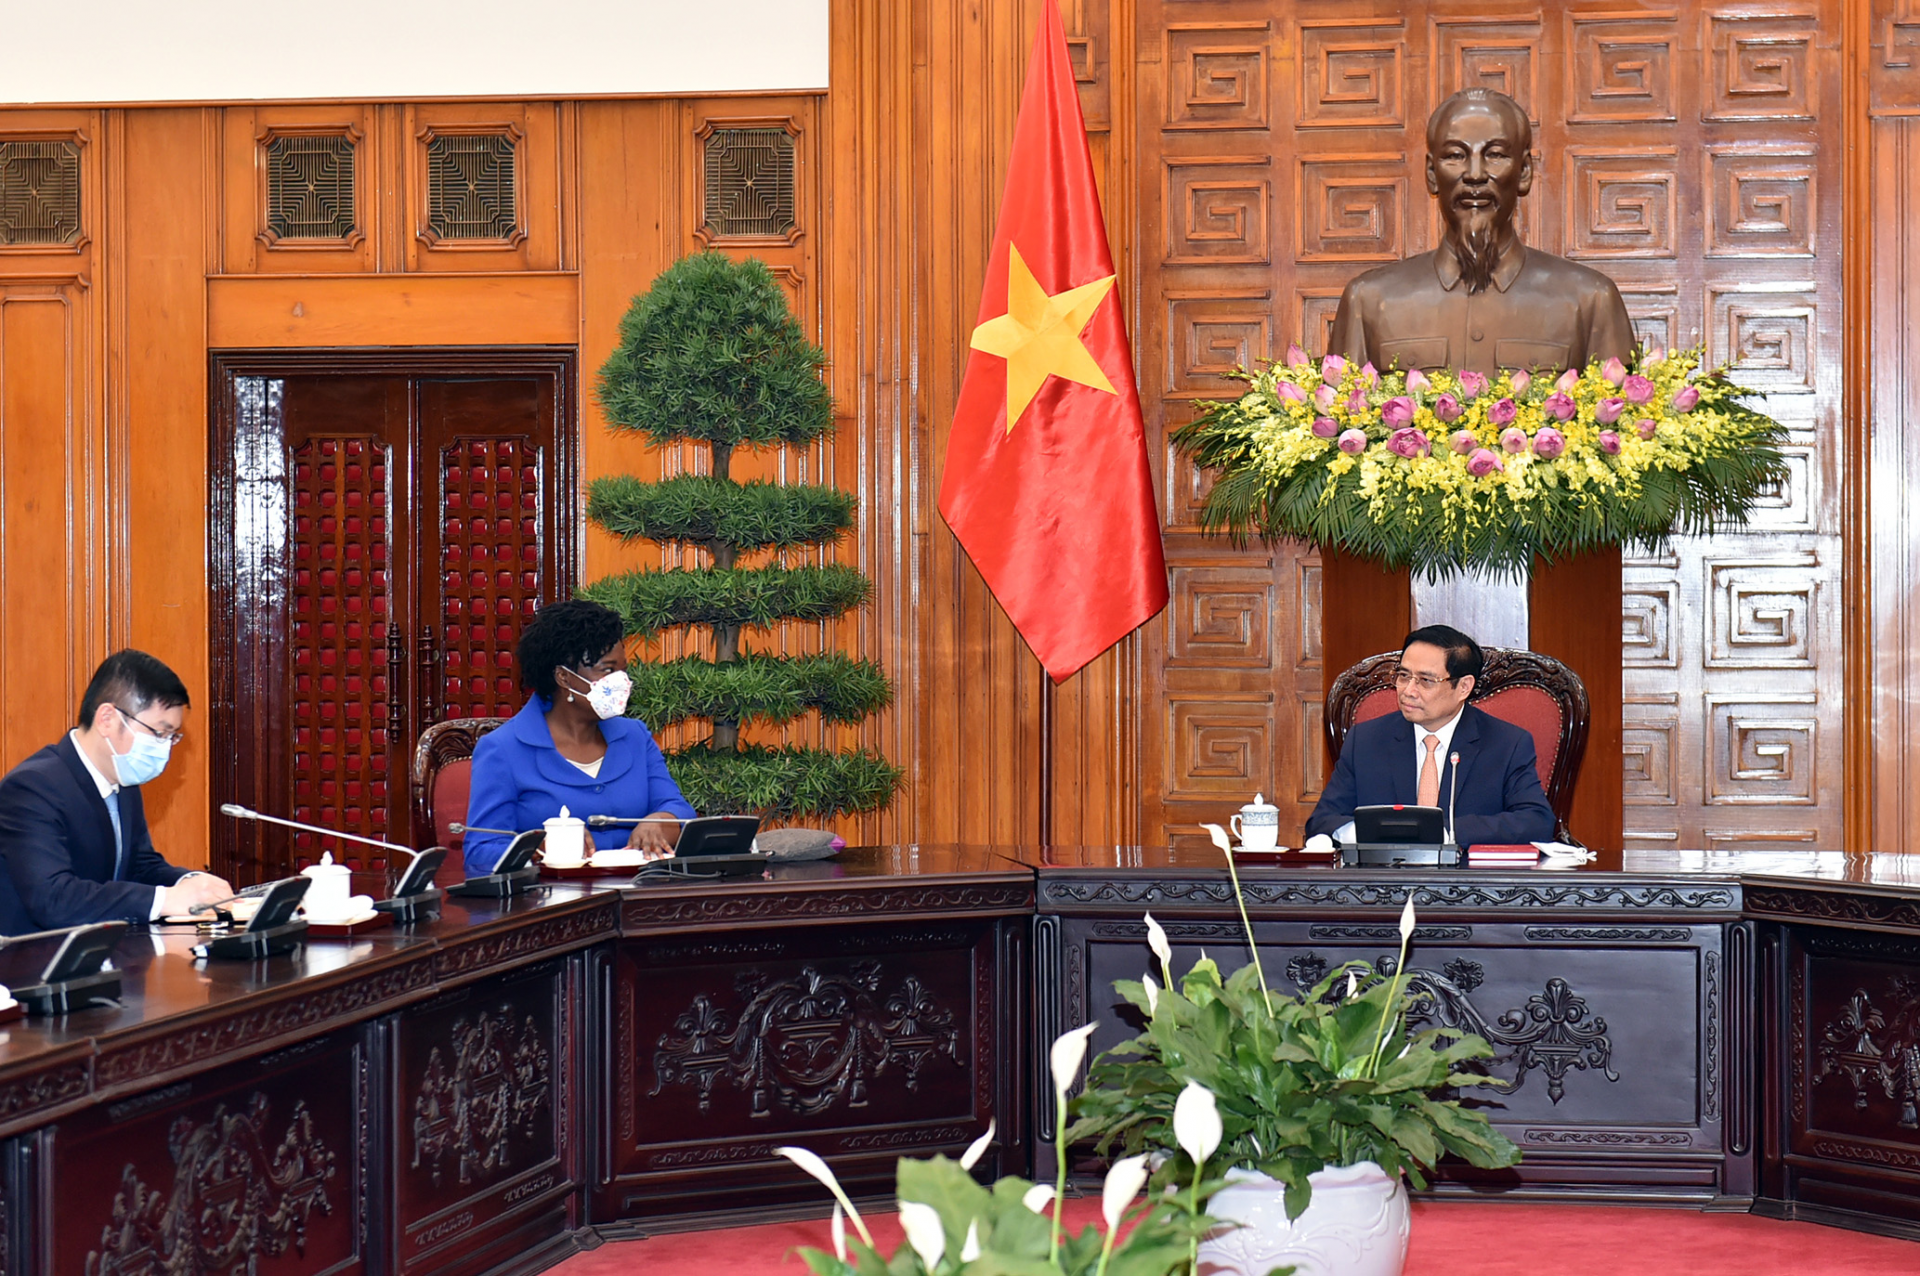 WB expresses agreement in supporting Vietnam’s socio-economic development